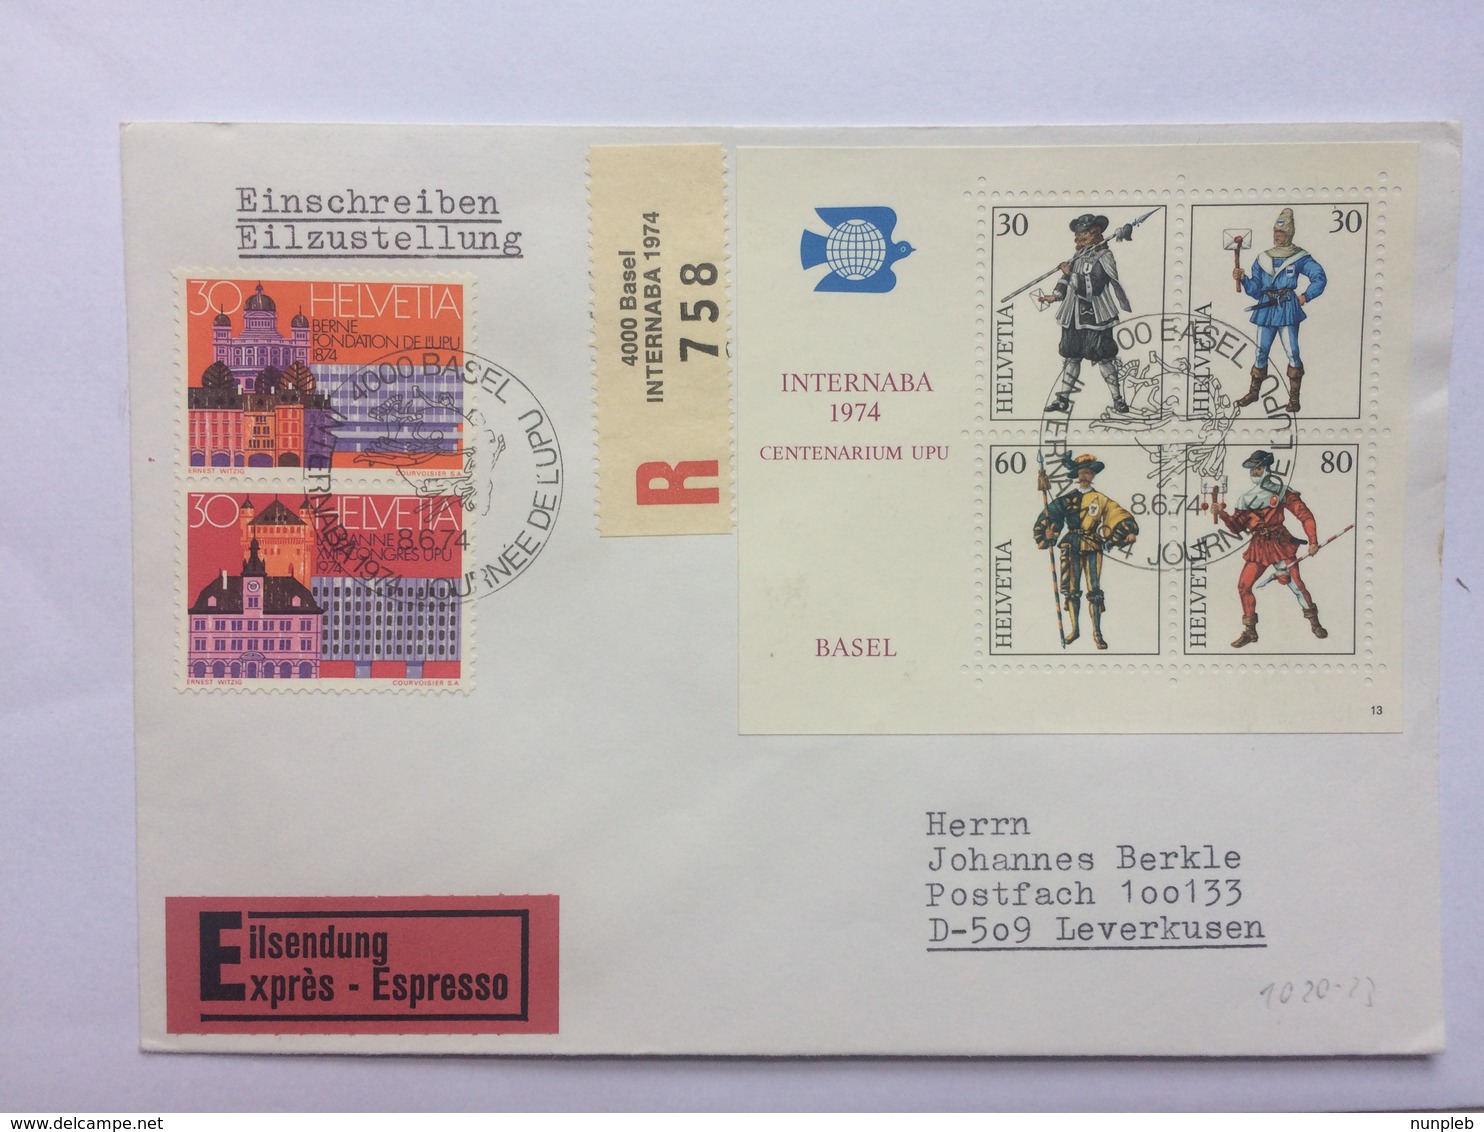 SWITZERLAND 1974 Internaba Centenarium UPU Basel Minisheet FDC Express Registered Basel To Leverkusen - Covers & Documents